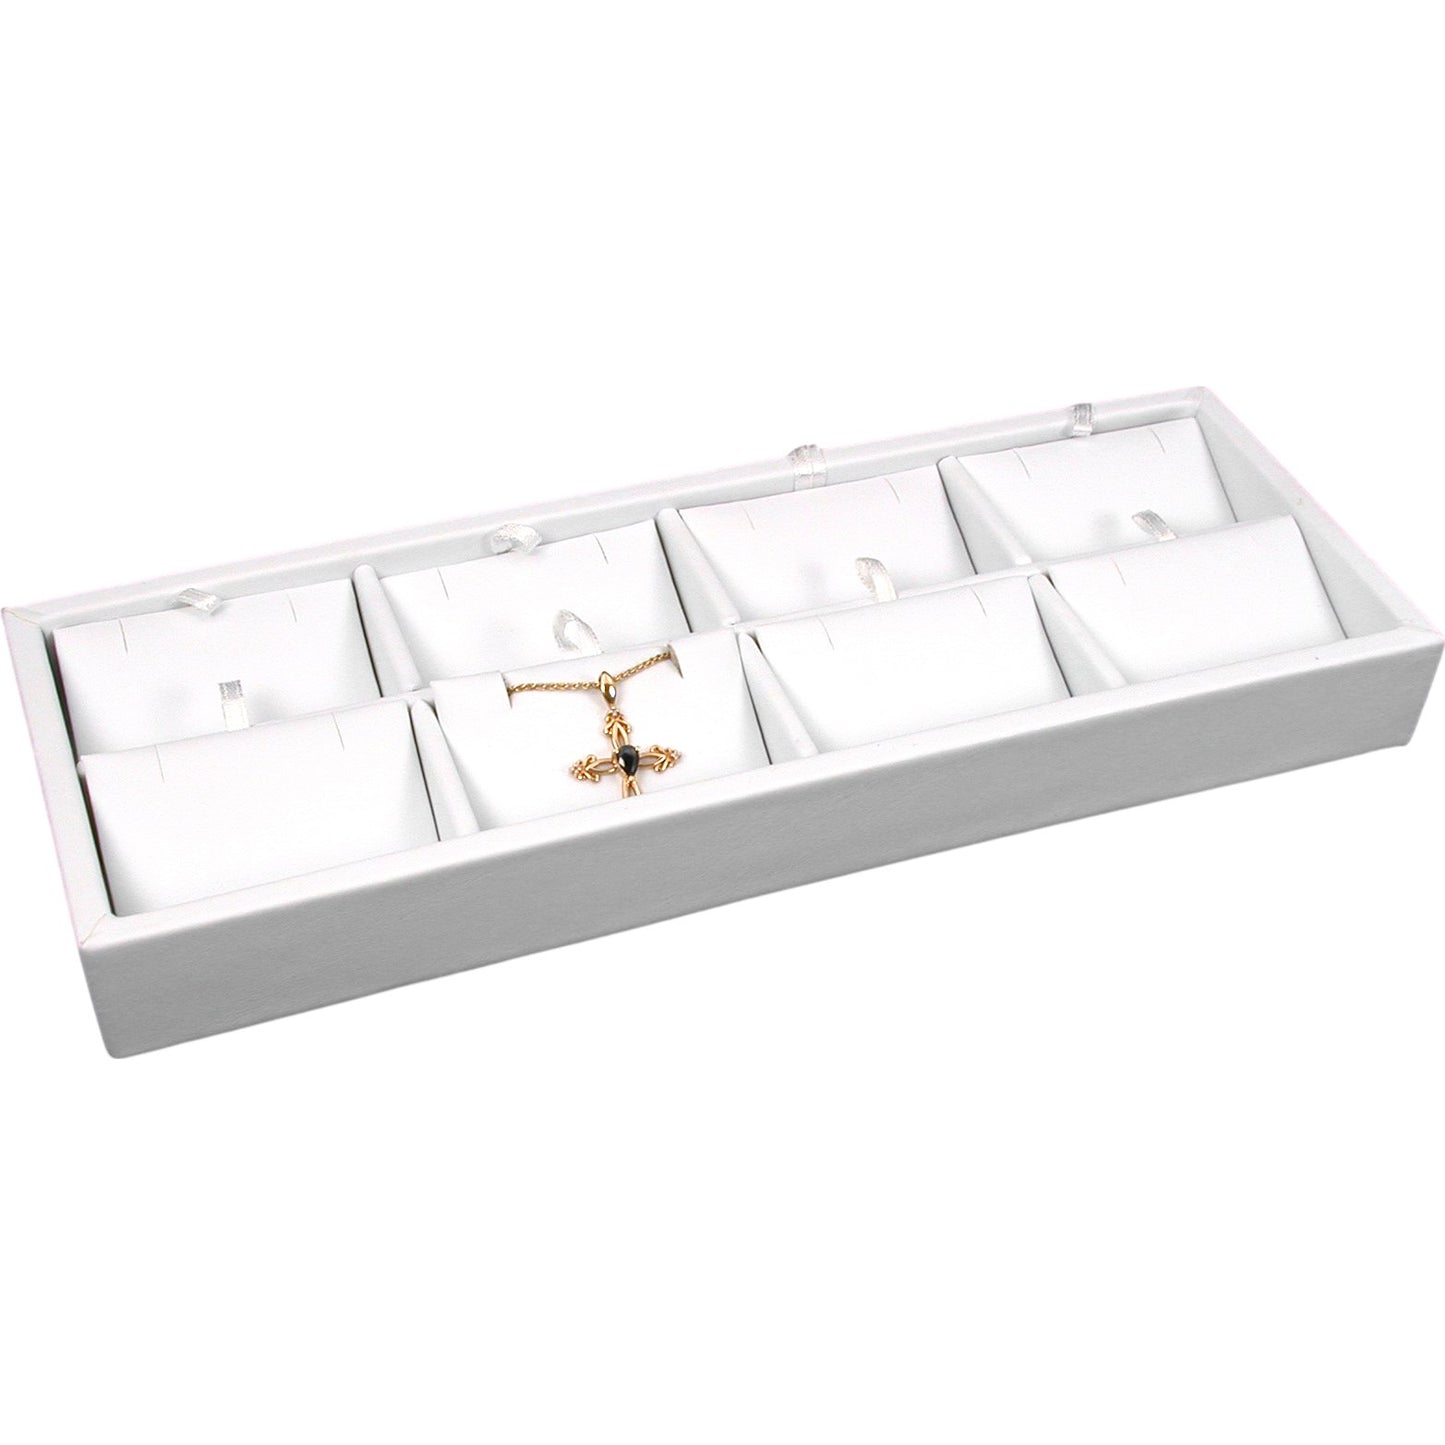 3 8-Slot White Leather Pendant Display Trays Jewelry